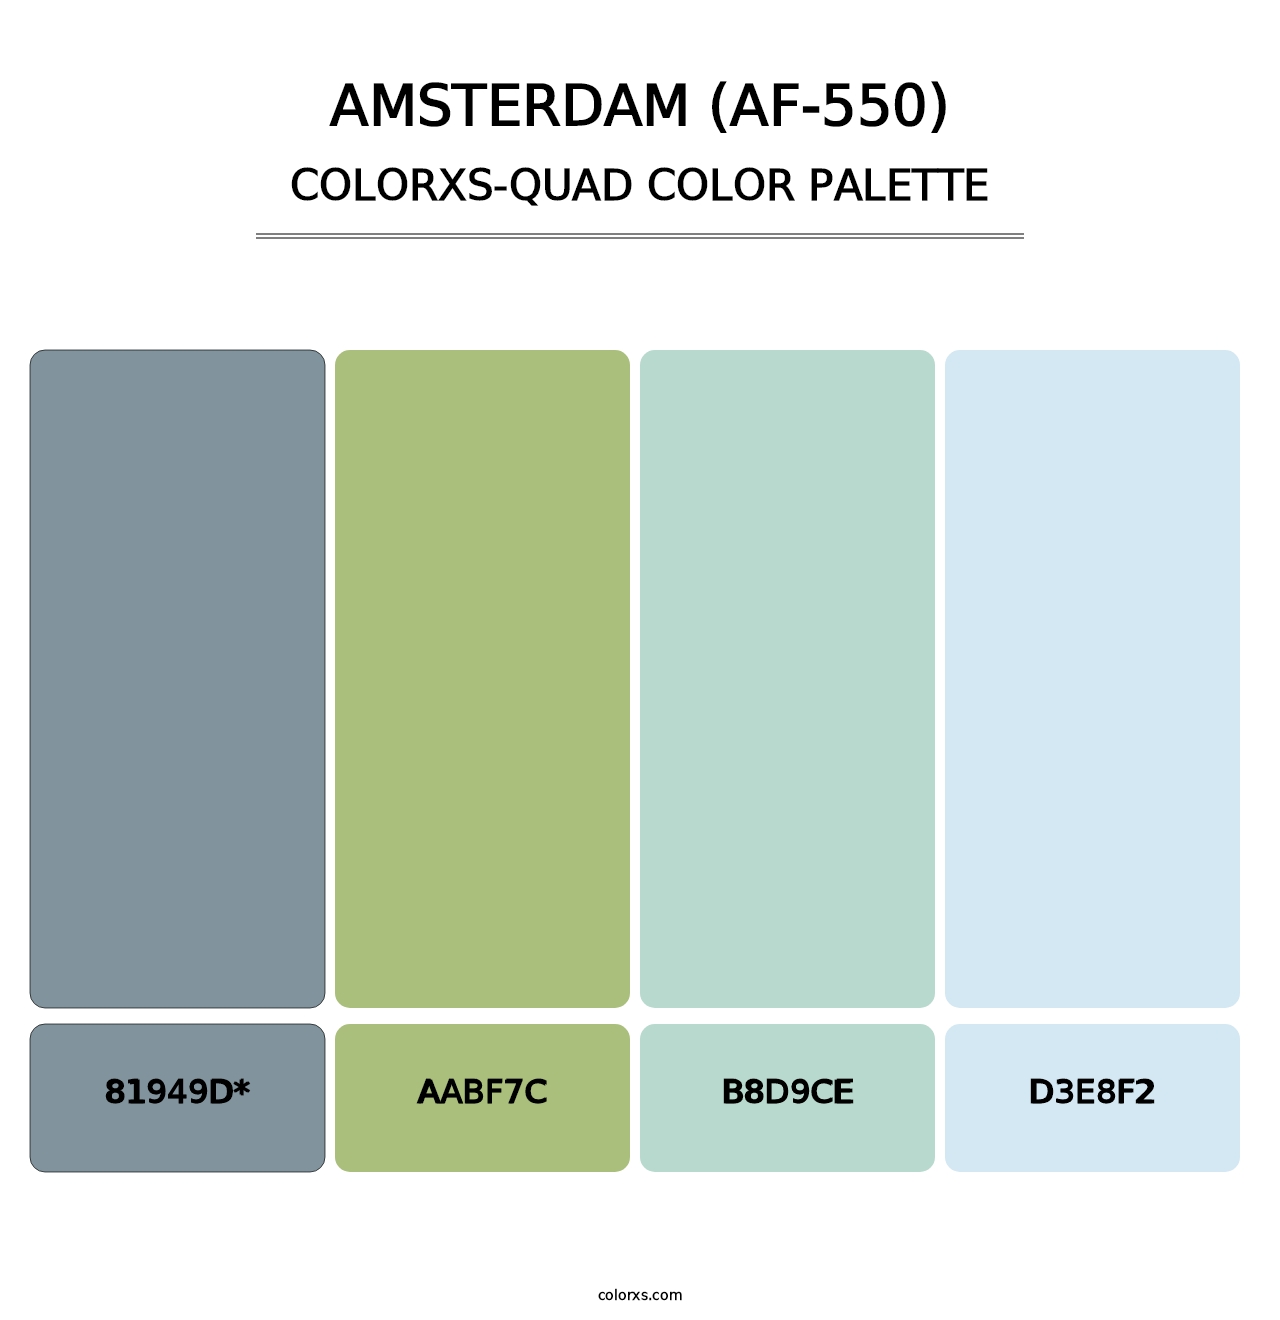 Amsterdam (AF-550) - Colorxs Quad Palette